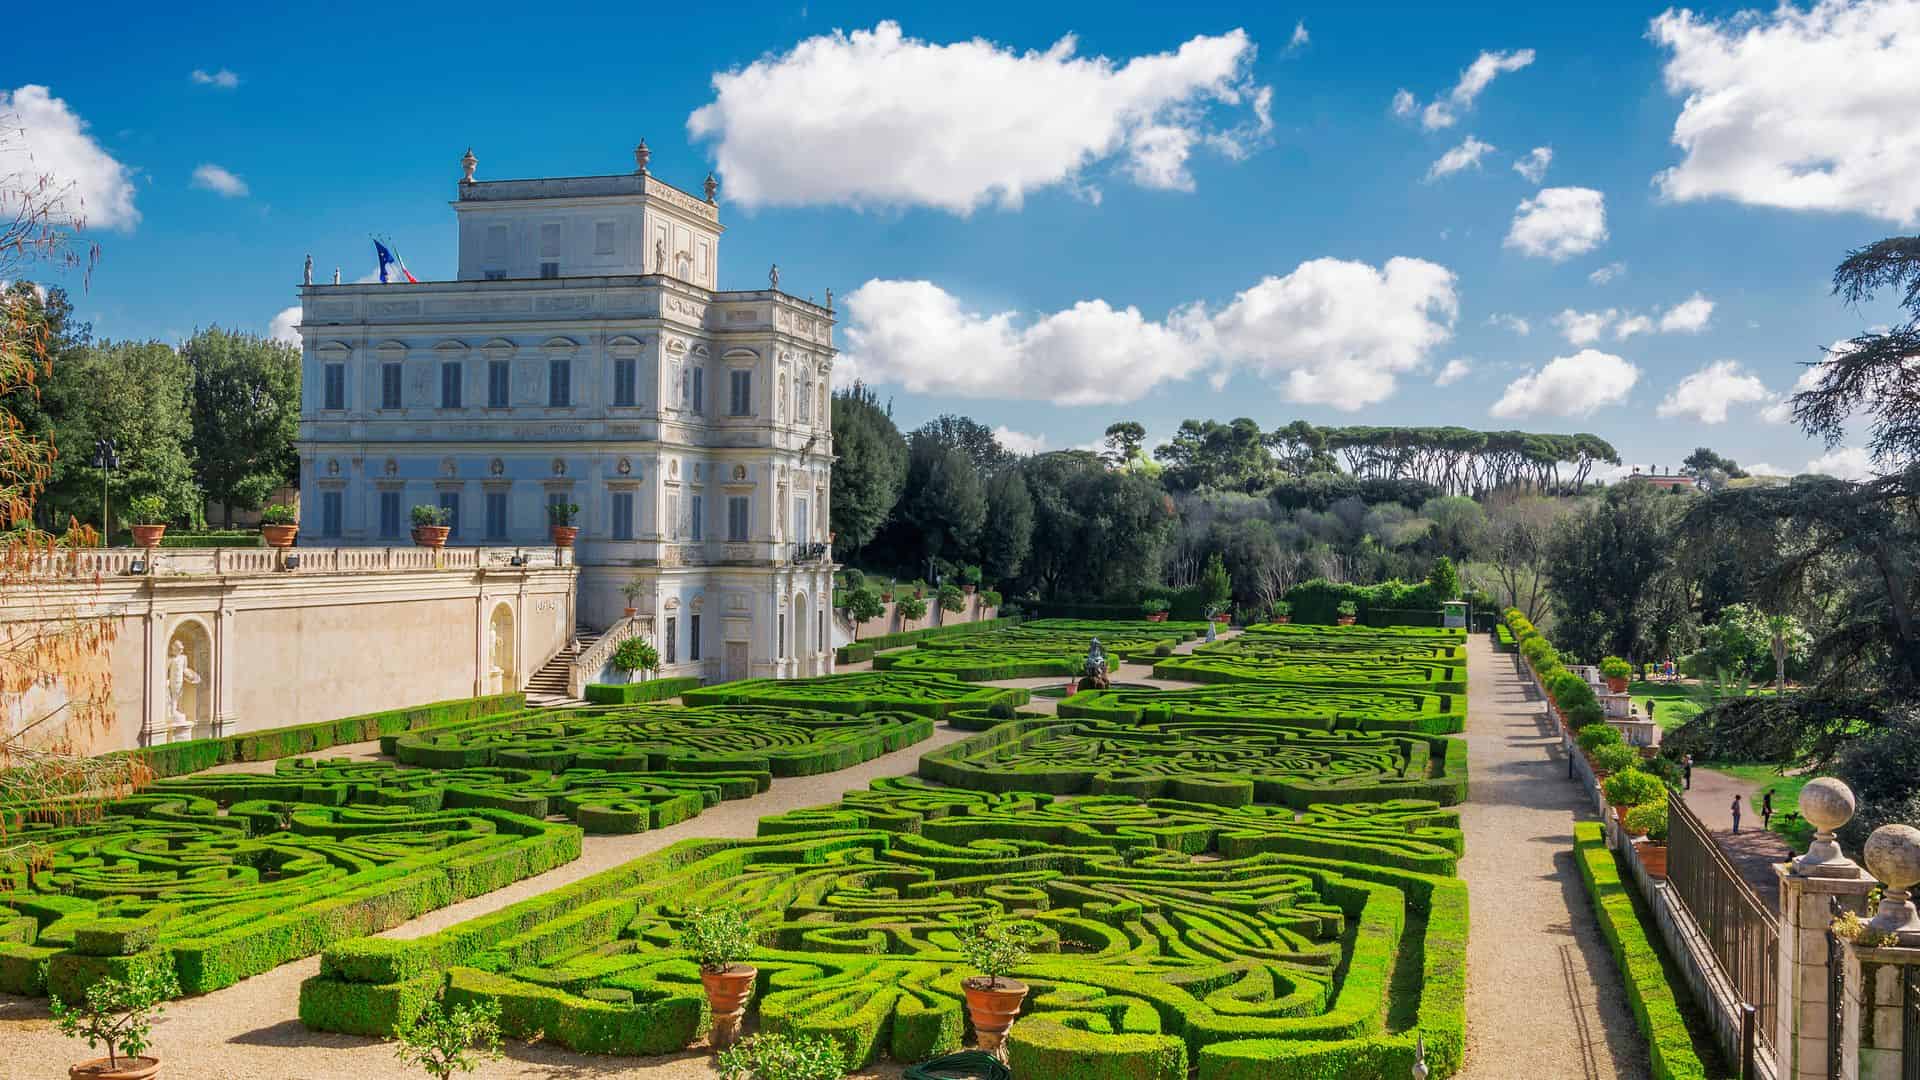 The secret garden at Villa Doria Pamphili.